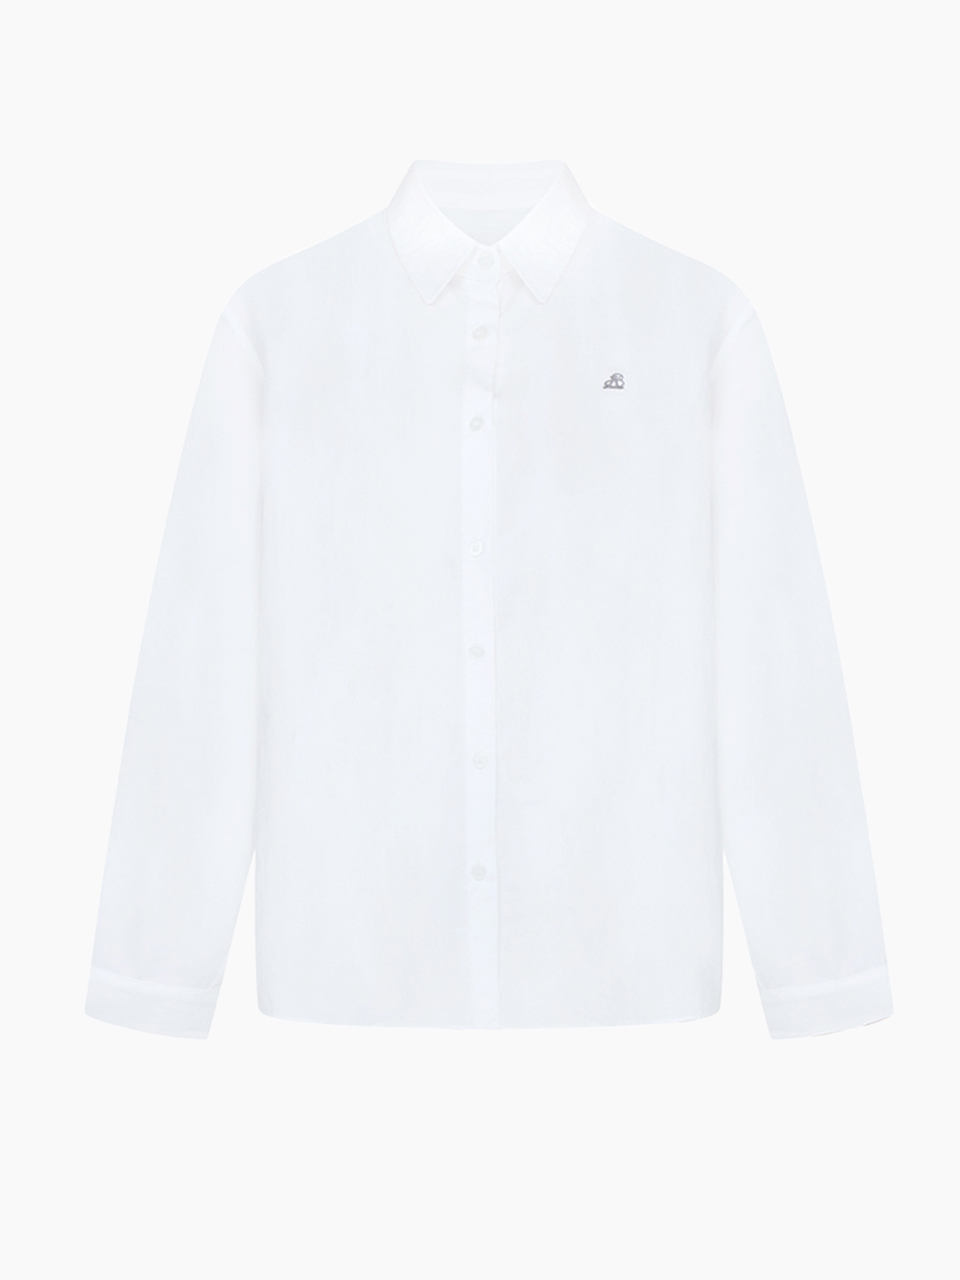 Classic overfit logo shirts - white